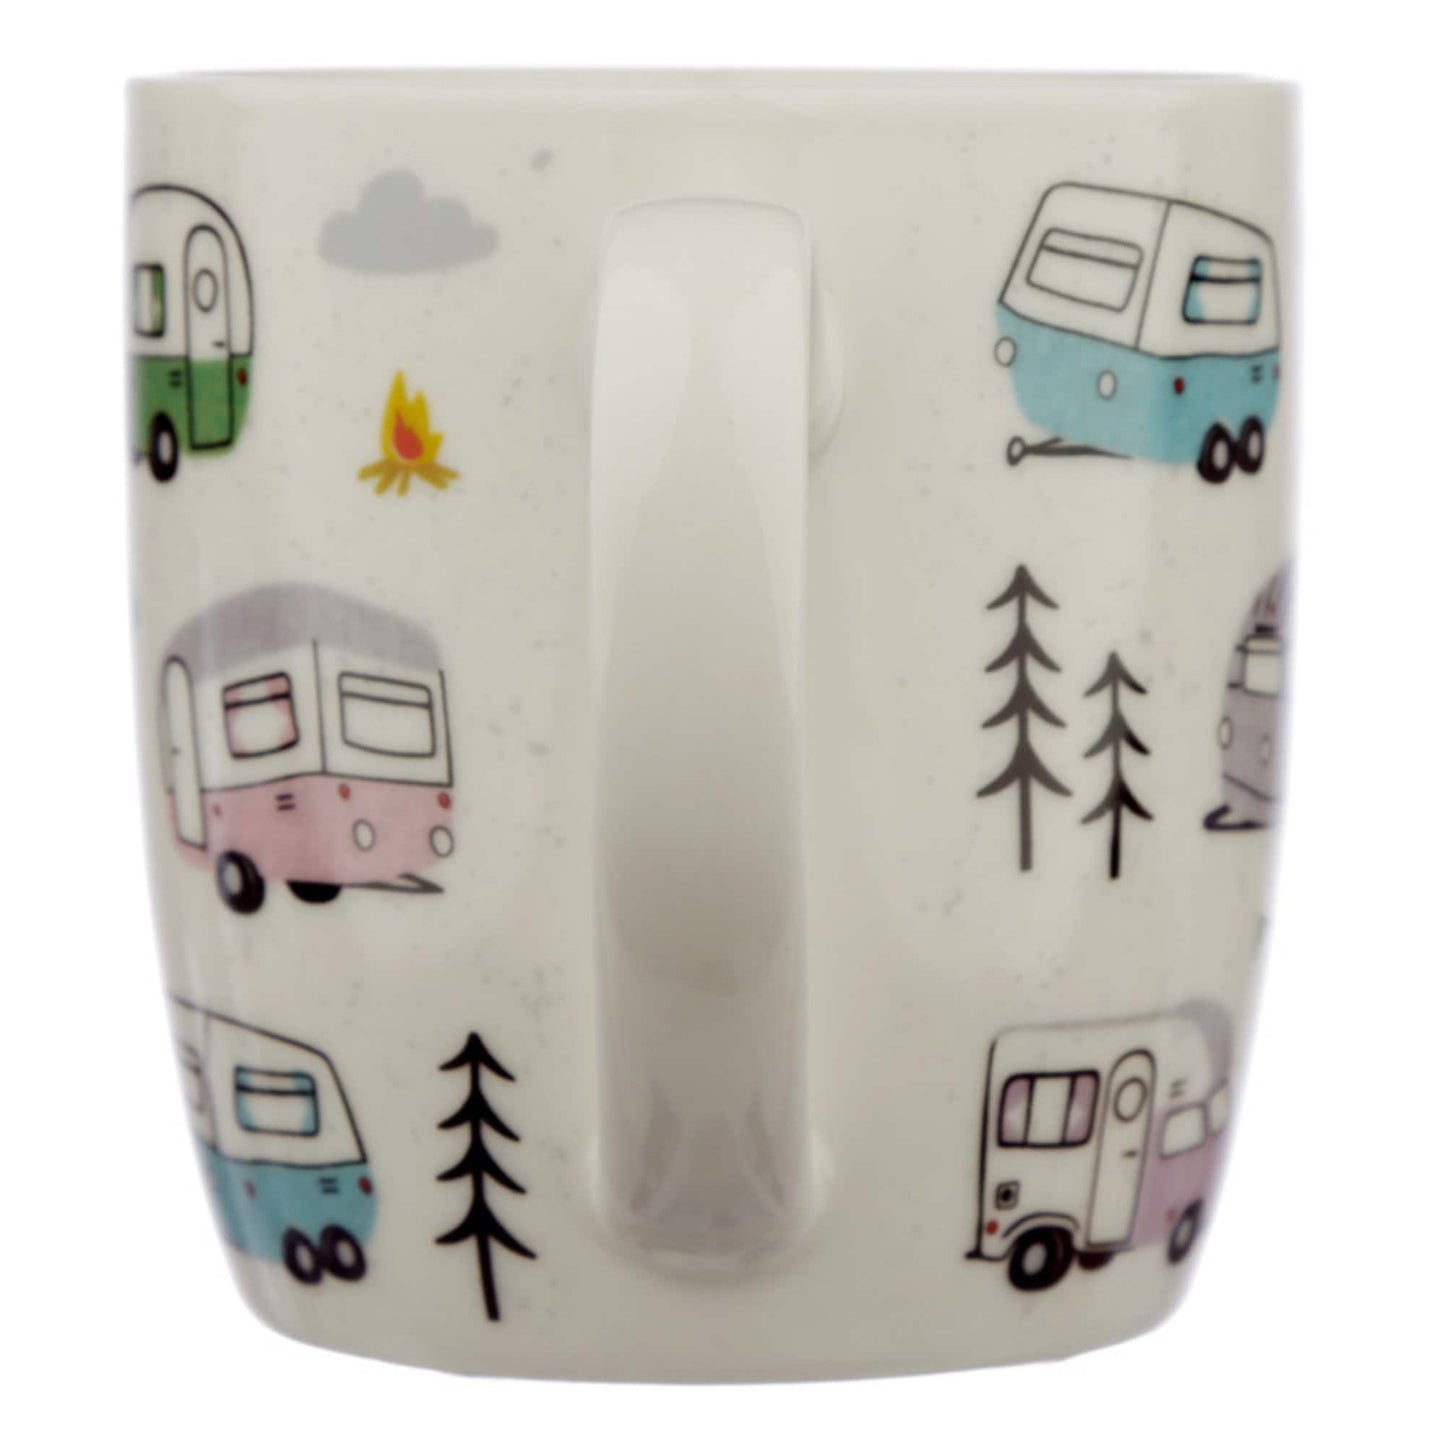 Caravan Design Porcelain Coffee Mug